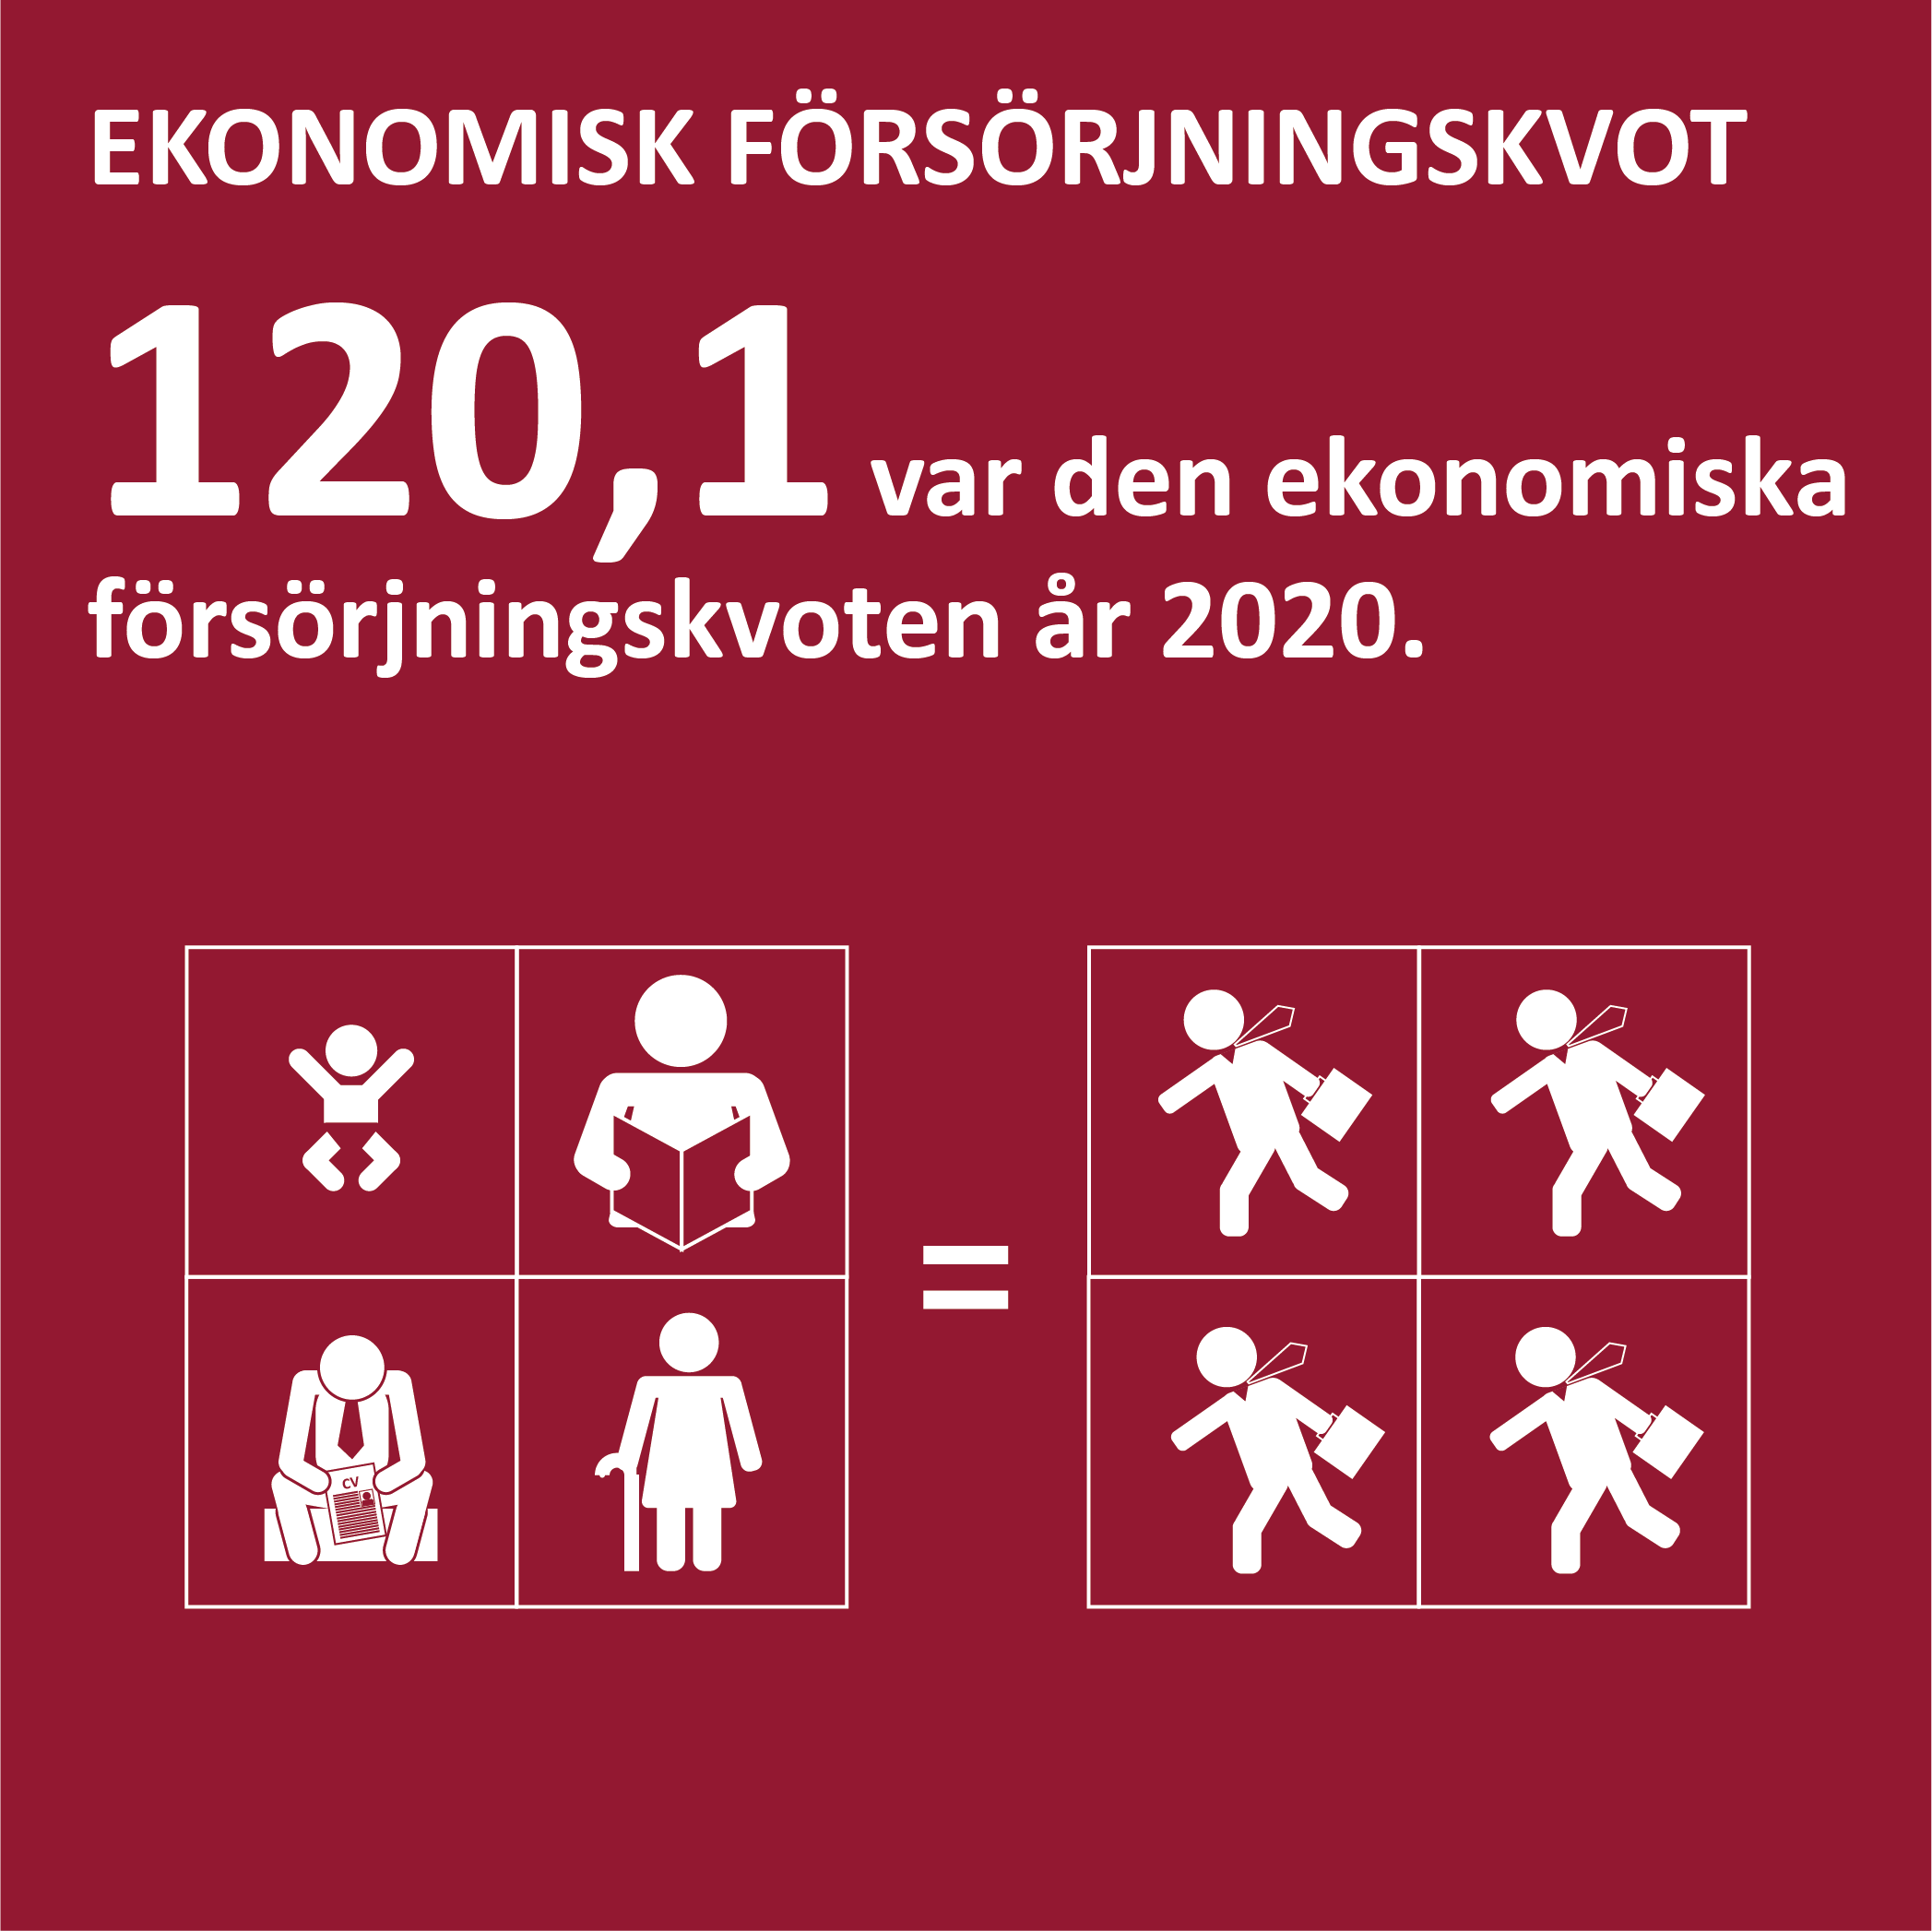 Infografik om ekonomisk försörjningskvot på Åland